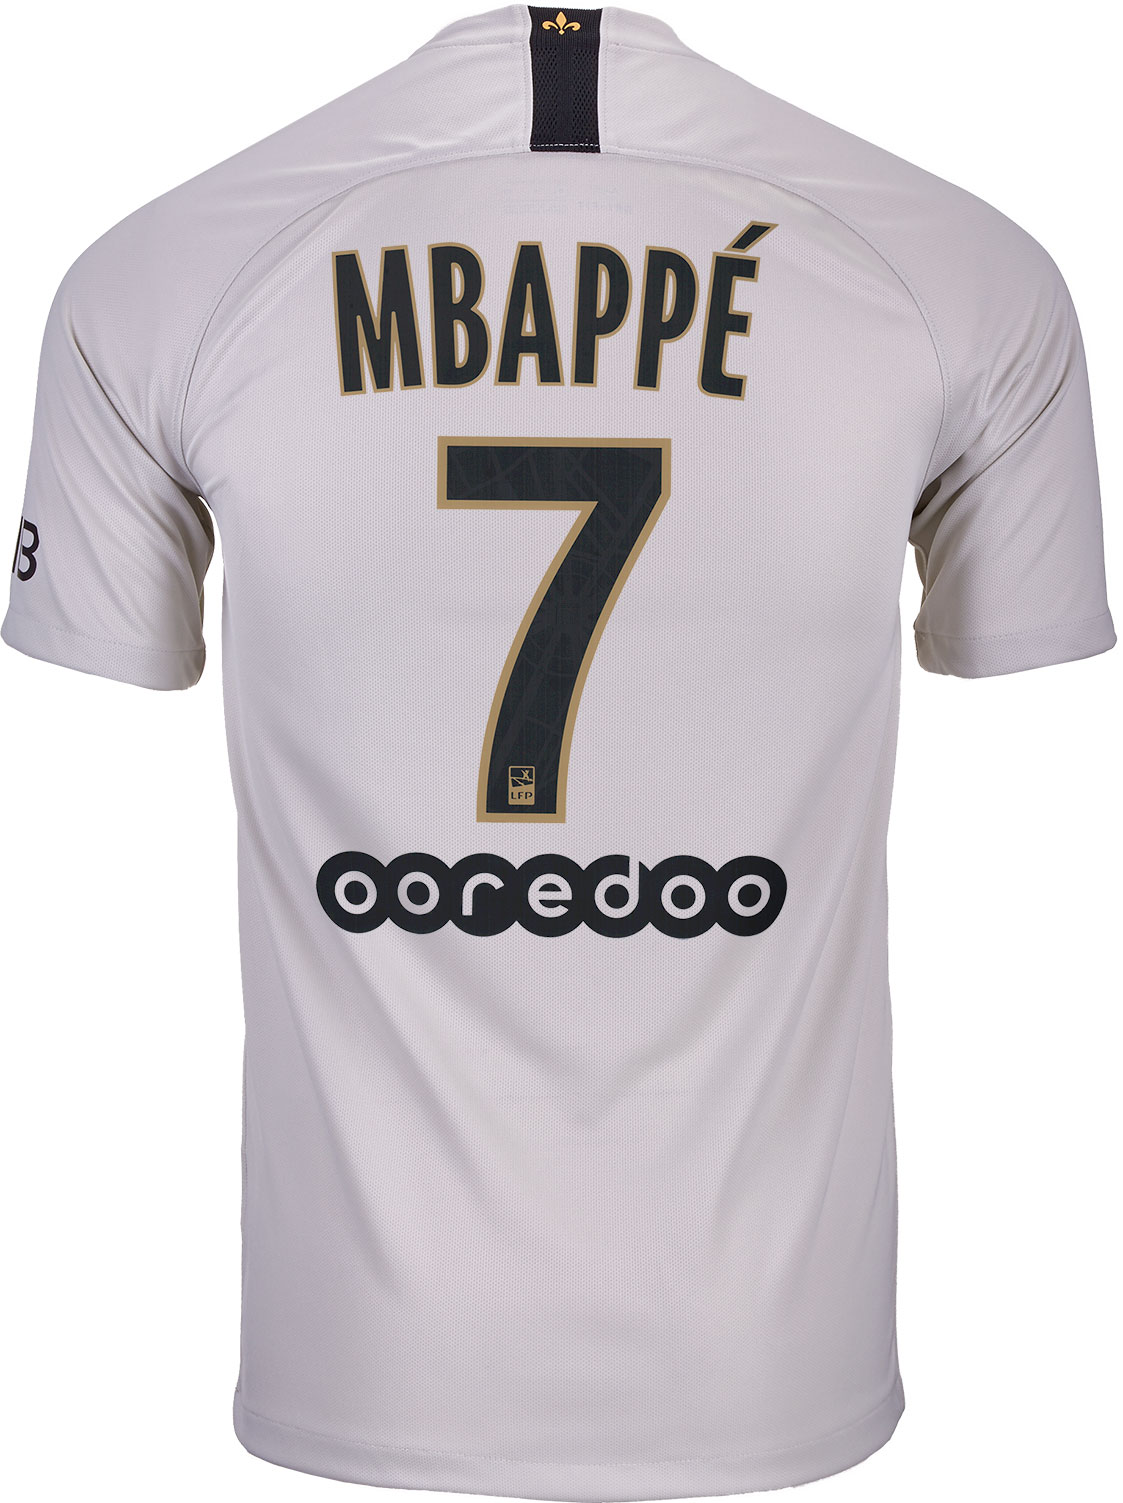 mbappe psg away jersey